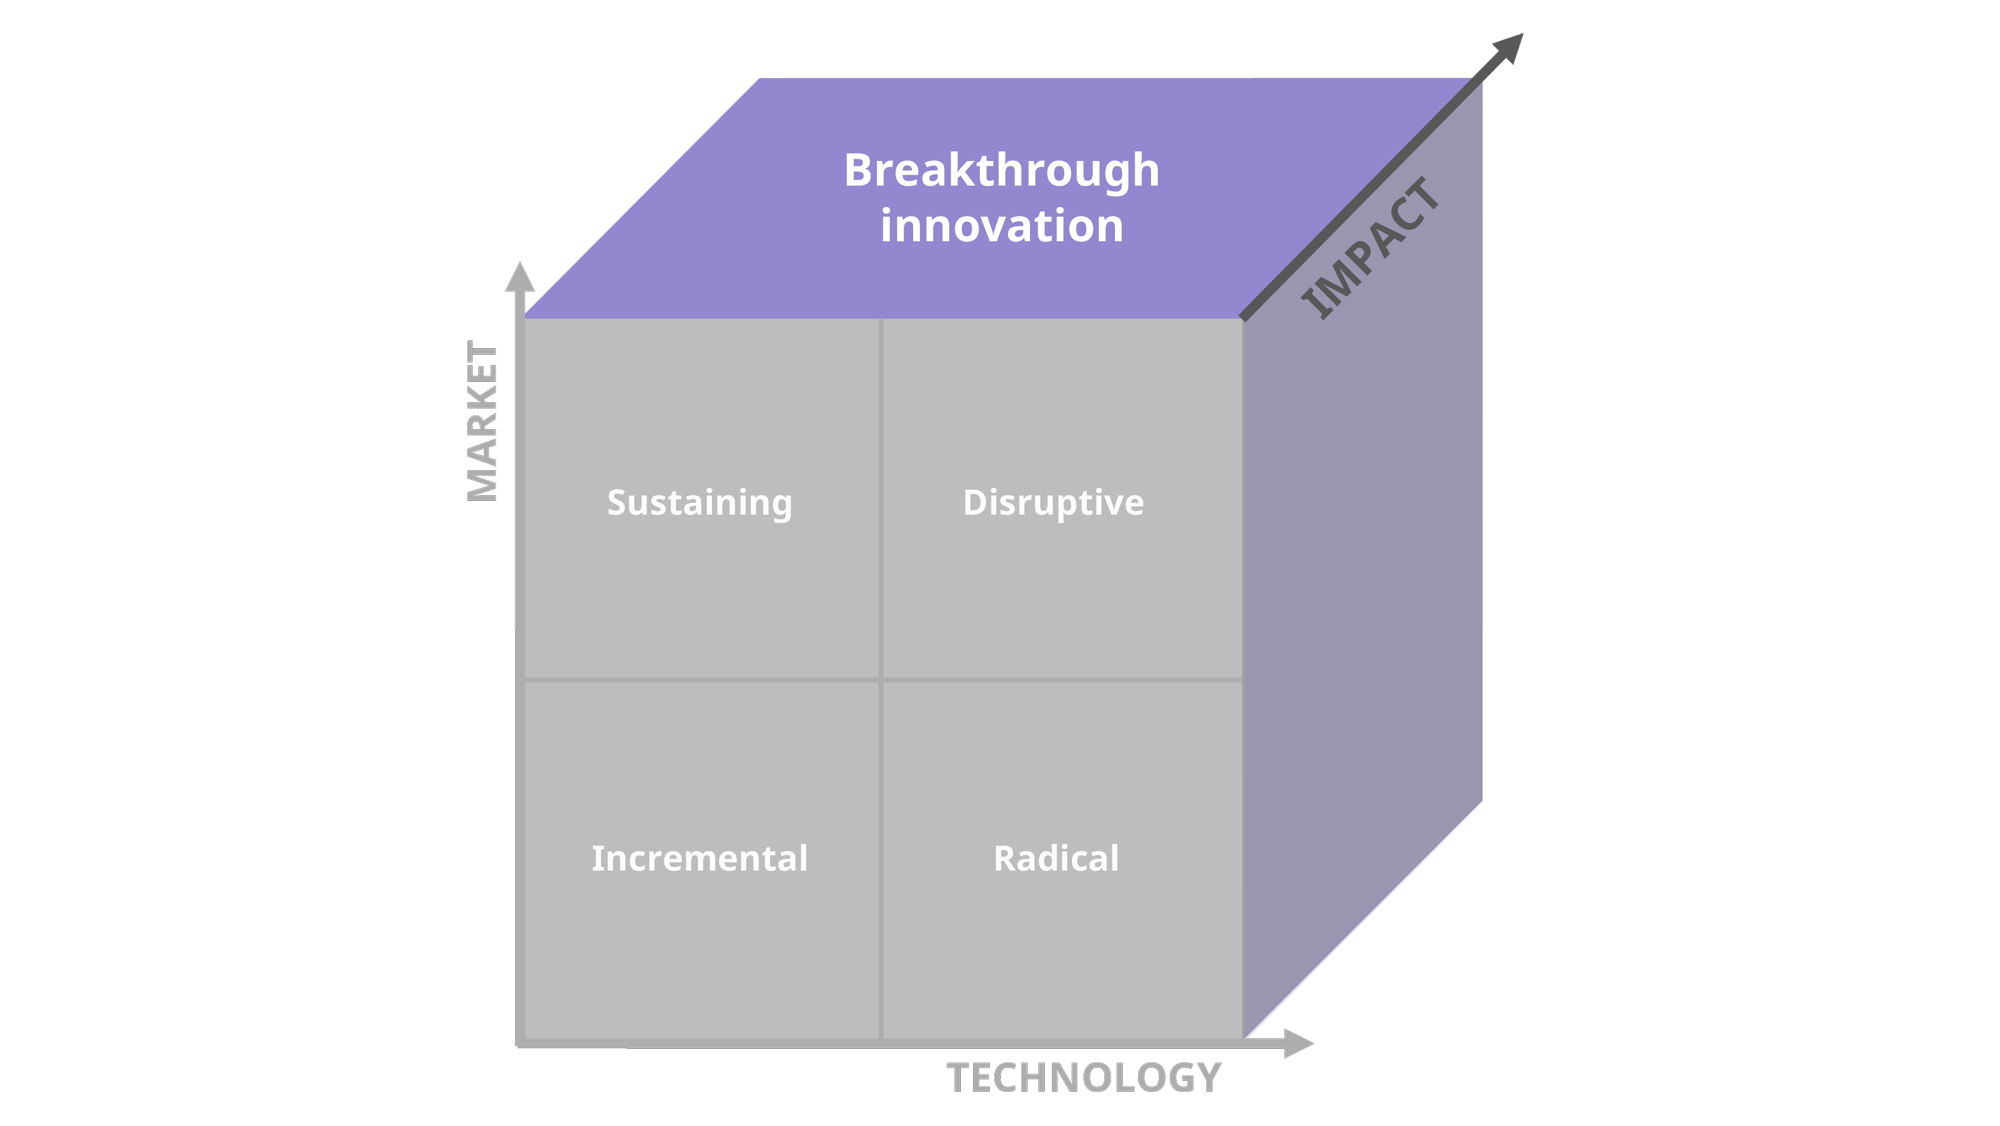 Breakthrough innovation defined